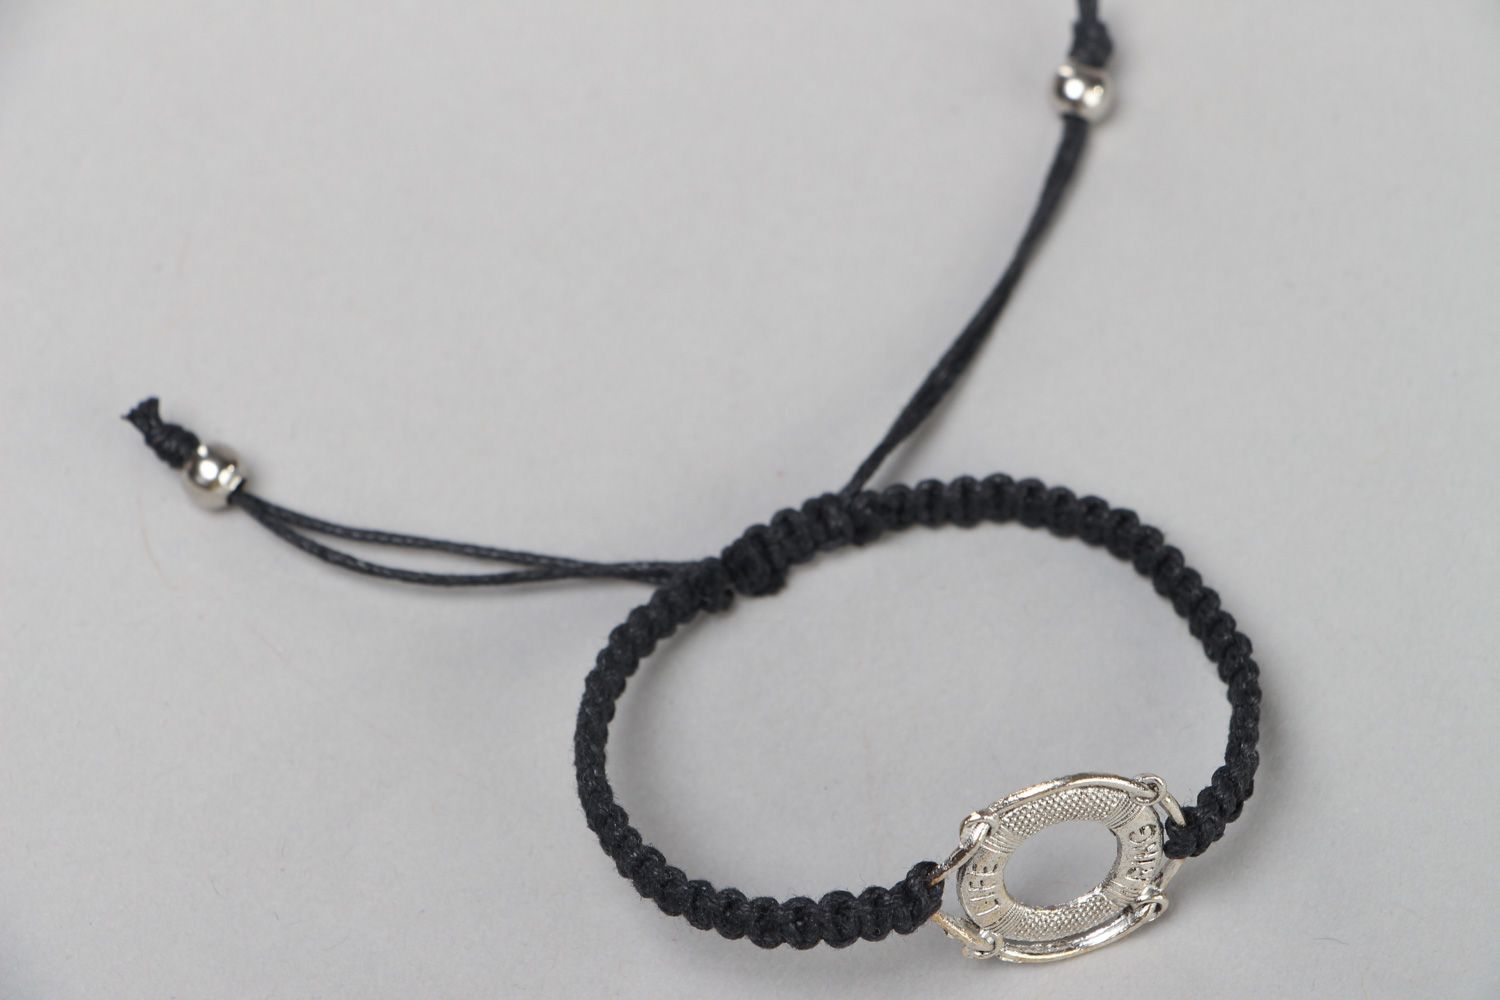 Handmade friendship wrist bracelet woven of black cord in marine style for women photo 2